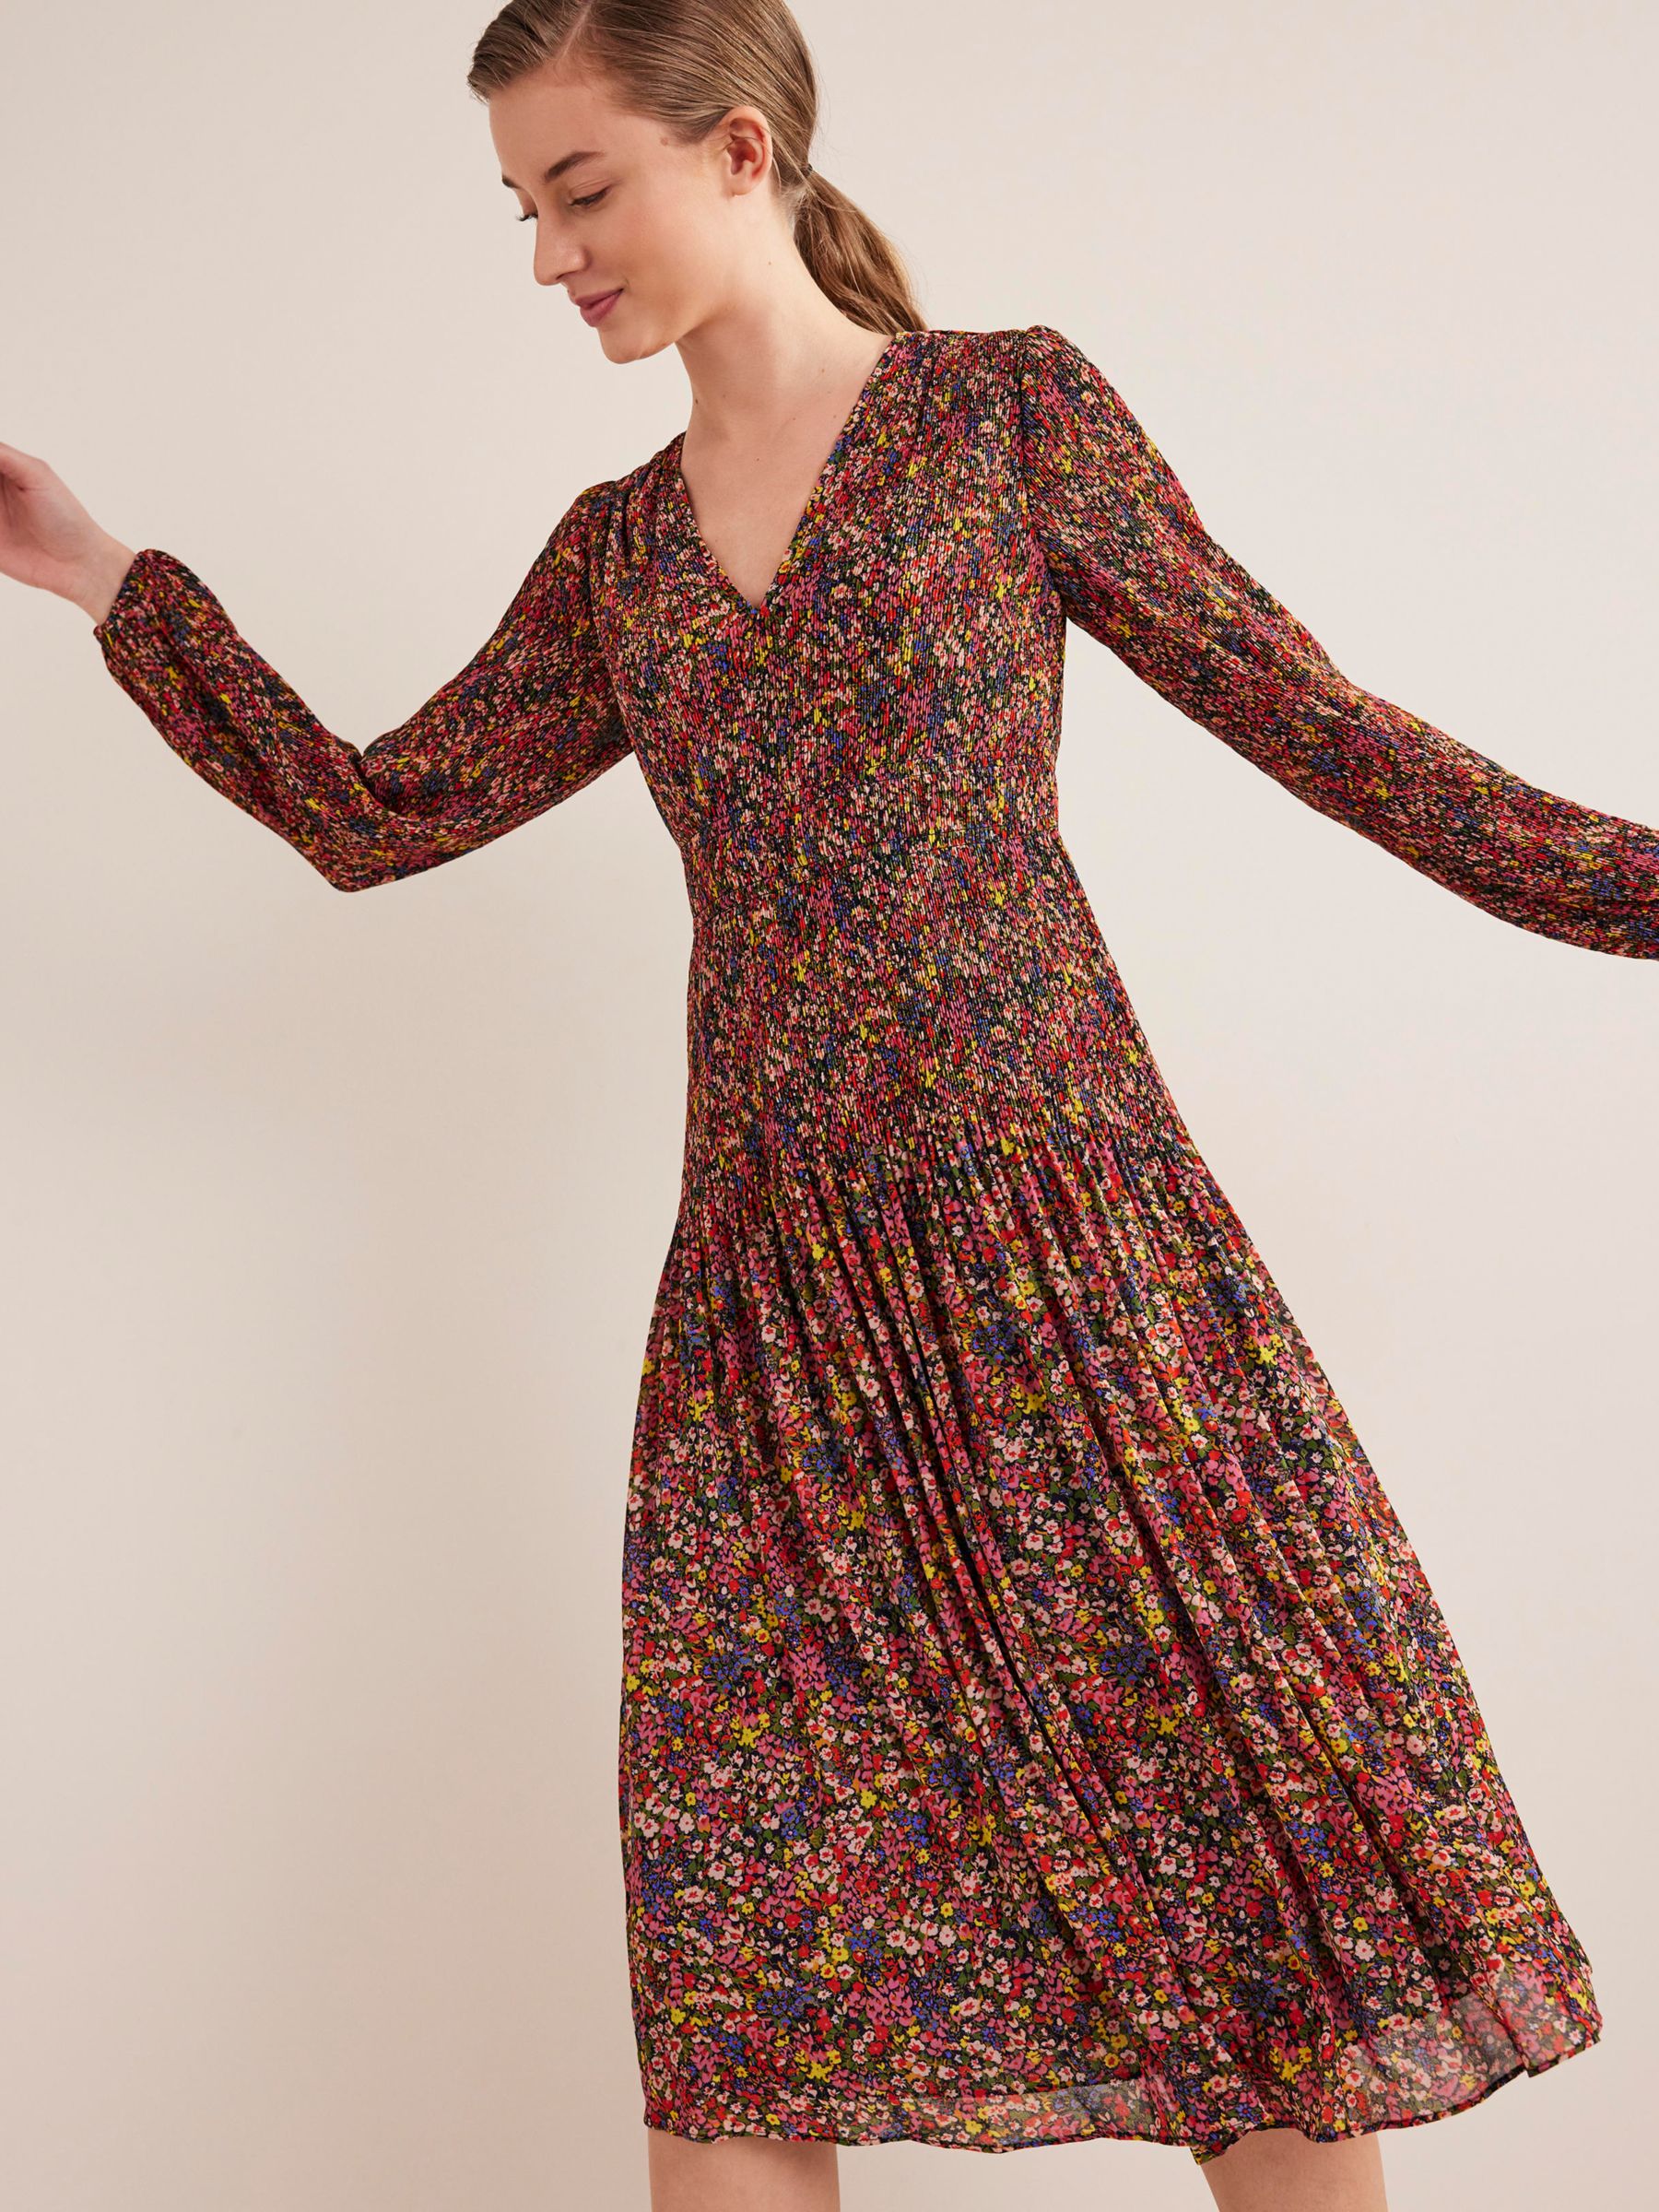 Boden Plisse Pleat Midi Dress, Gardenia at John Lewis & Partners